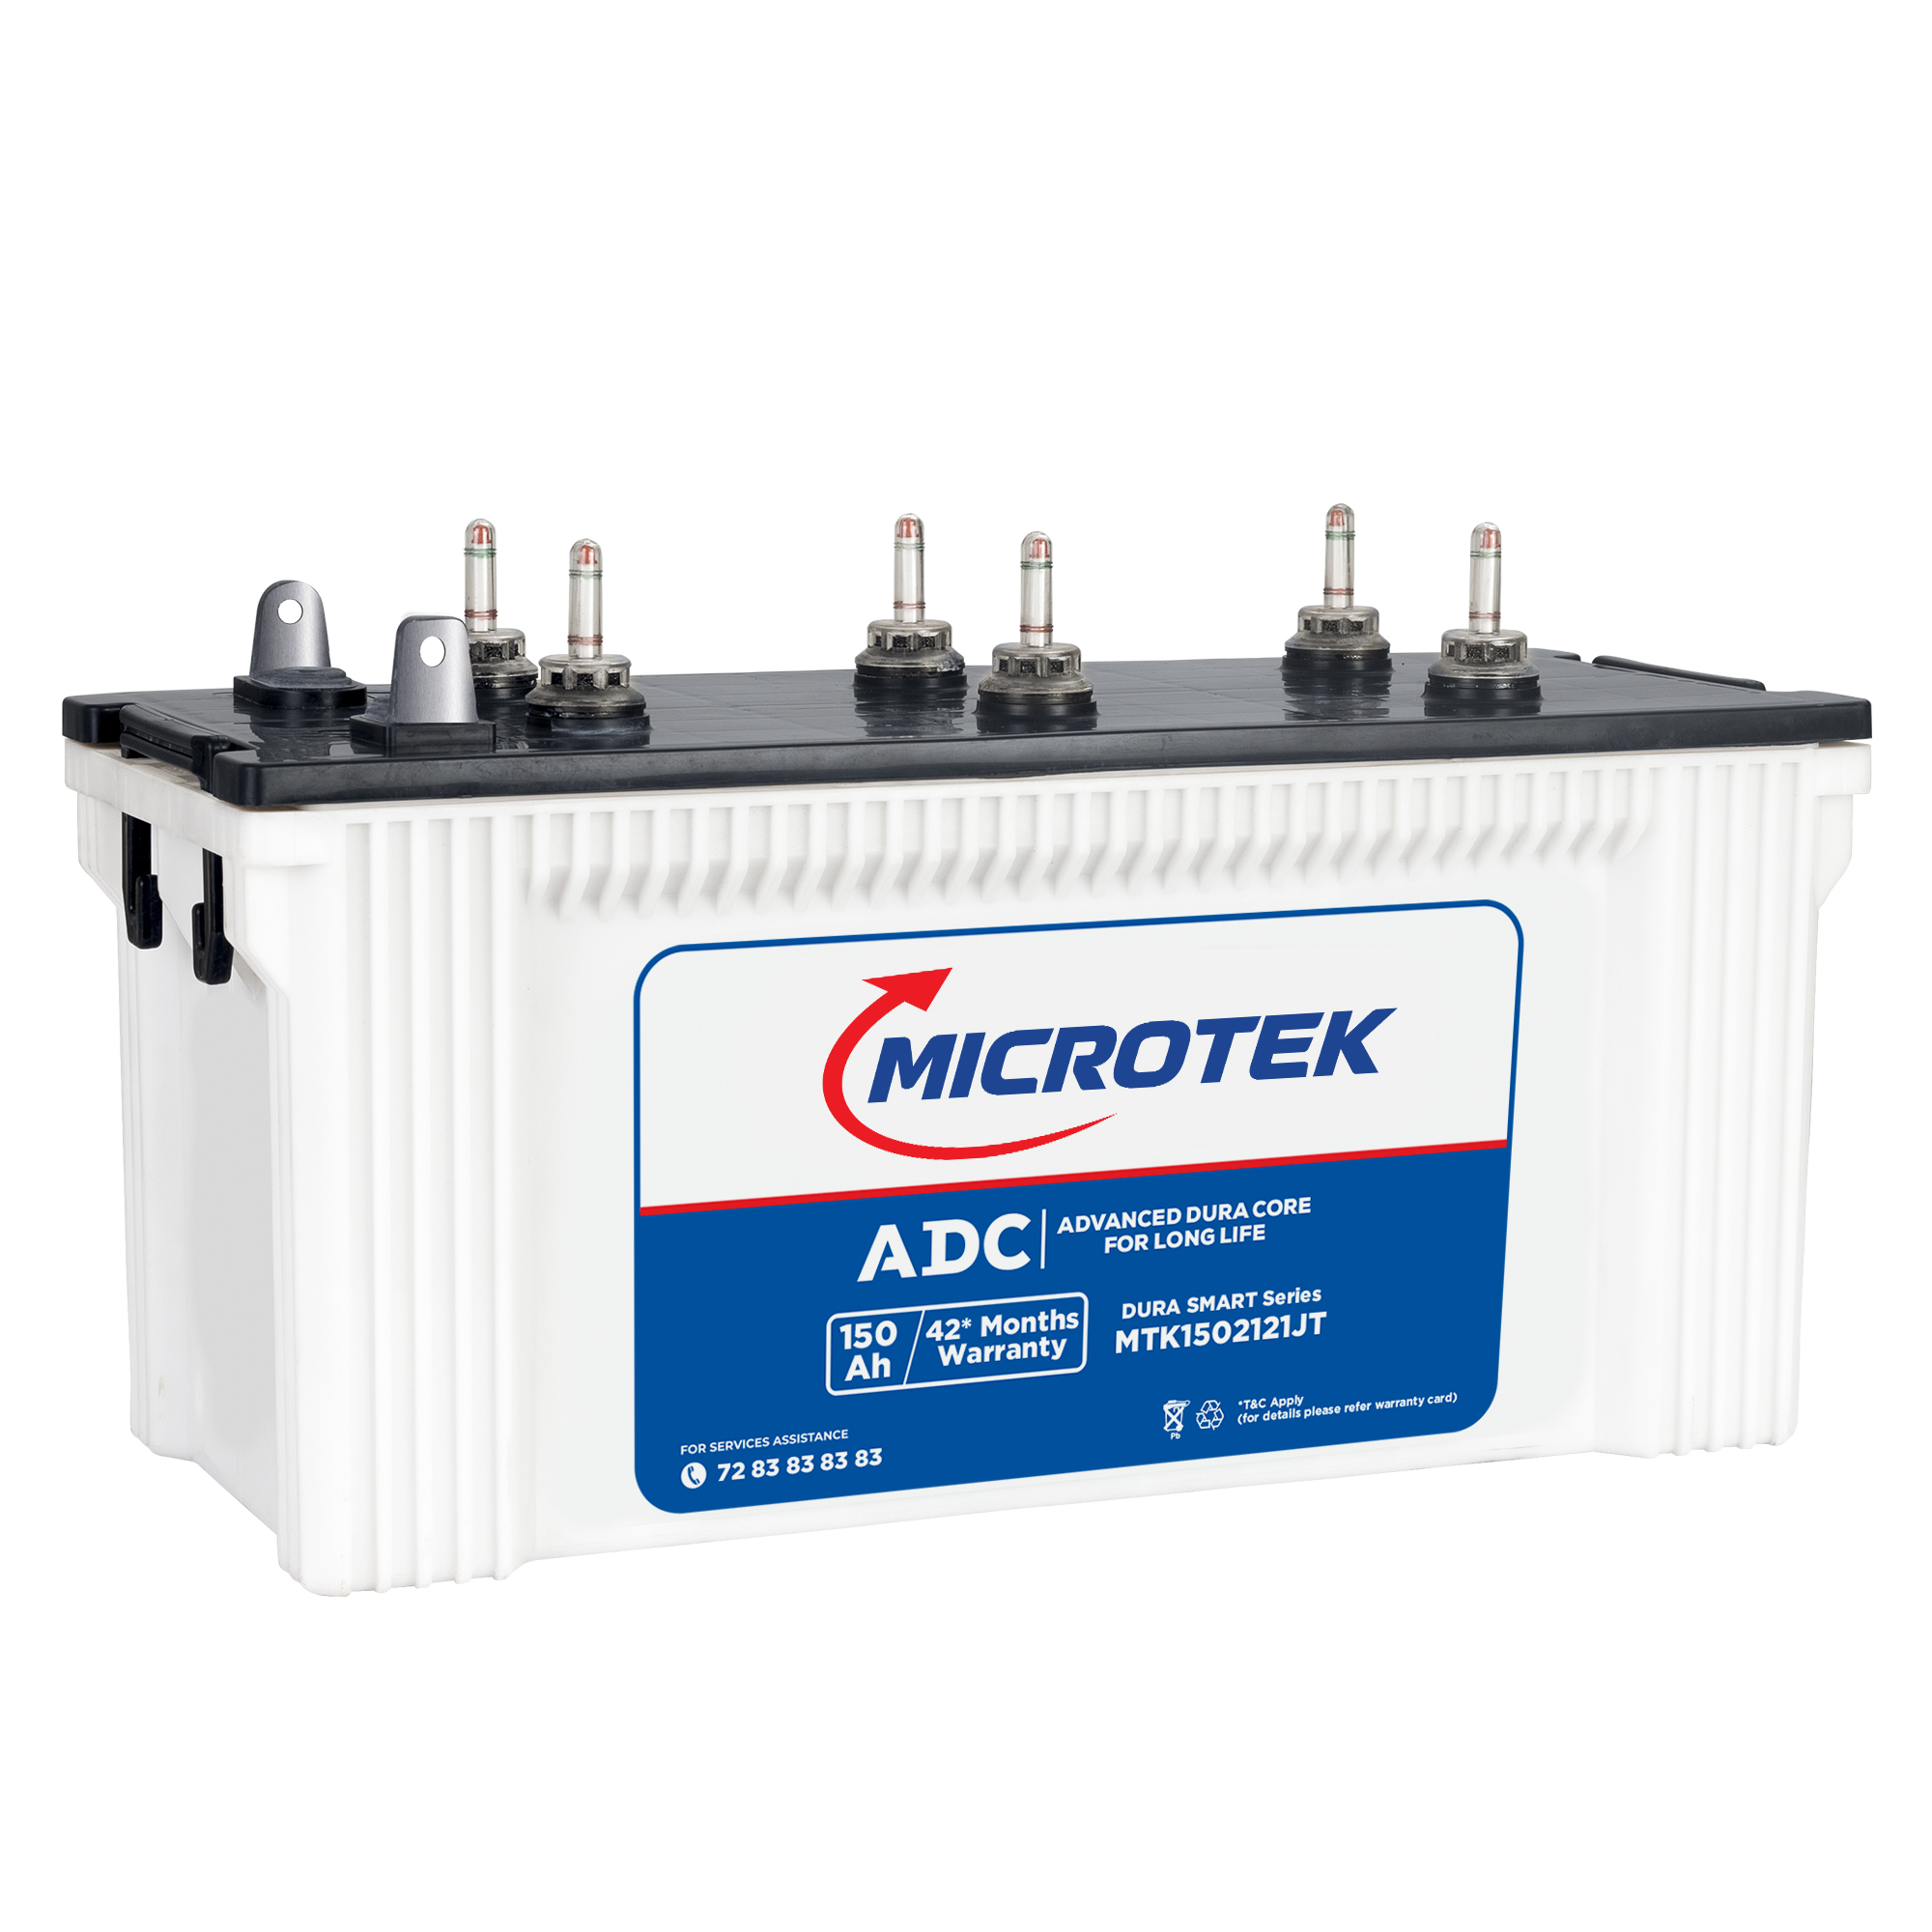  Microtek Dura Smart MTK1502121JT 150Ah/12V Inverter Battery With Advanced Dura Core Technology